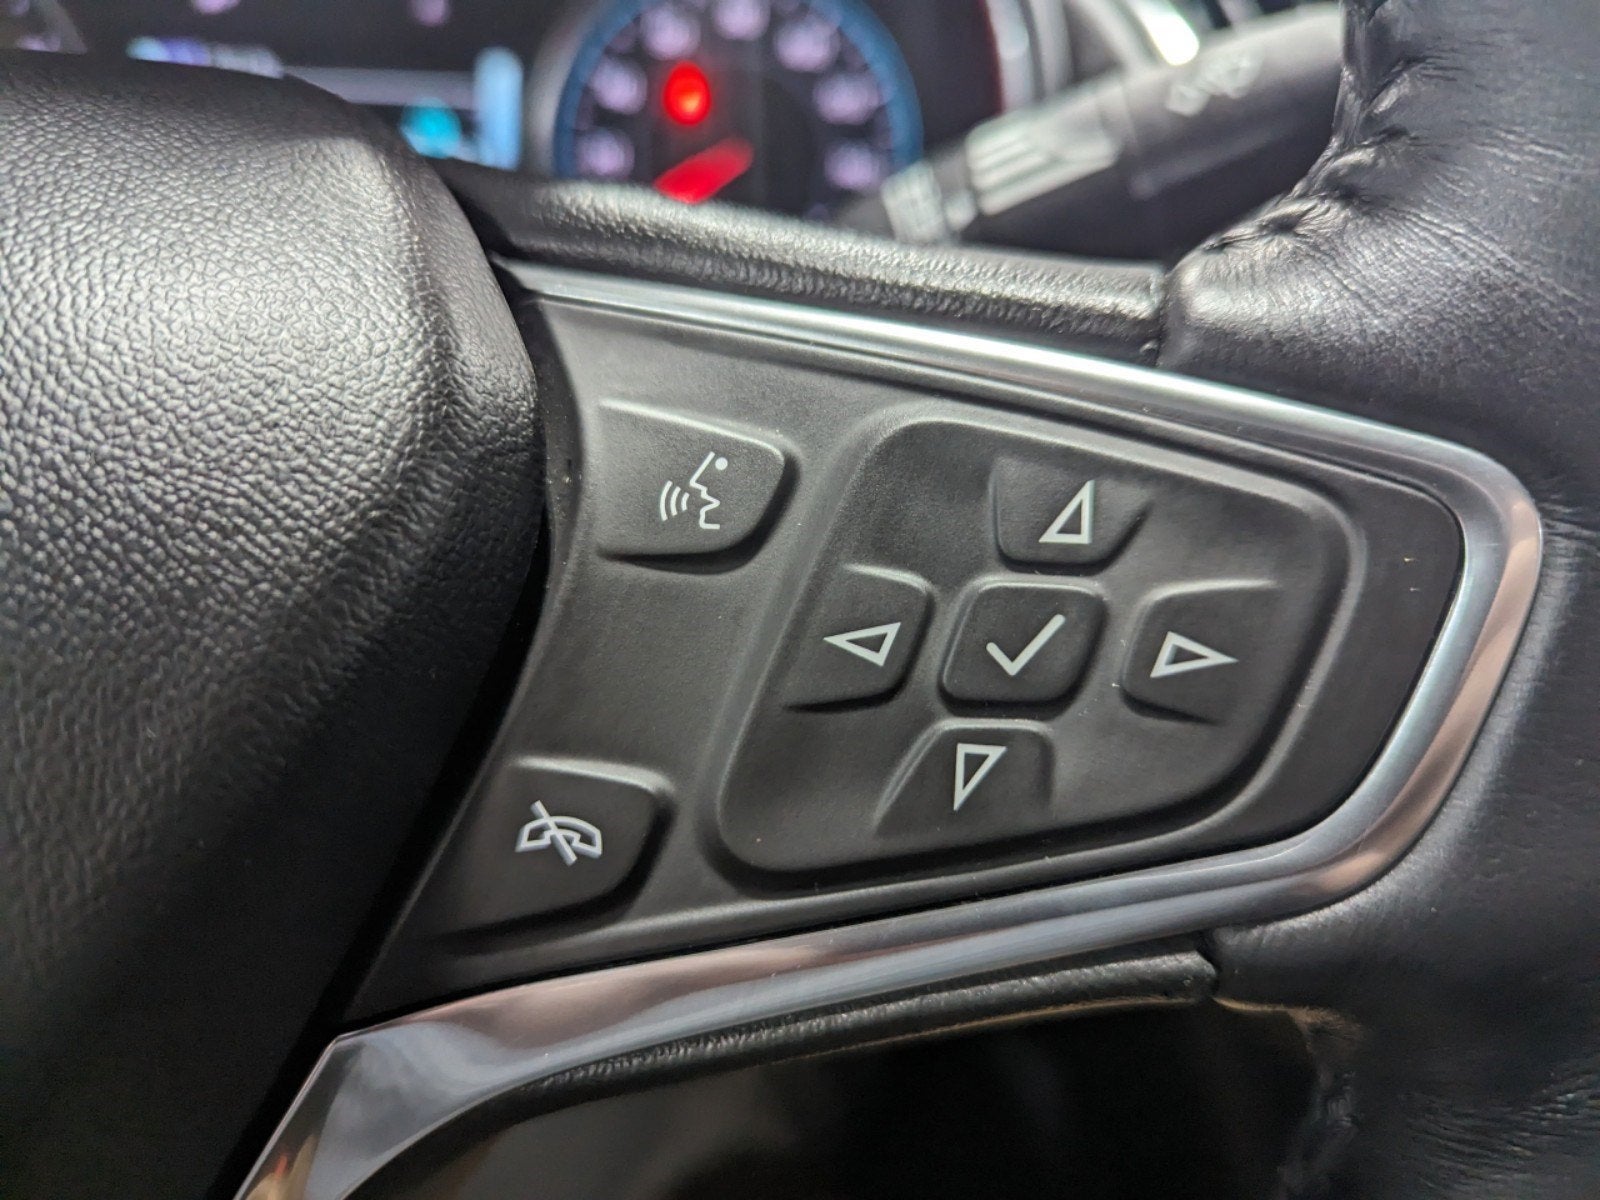 2016 Chevrolet Malibu Premier Front Wheel Drive Heated/Cooled Preferred Equipment Pkg Sunroof